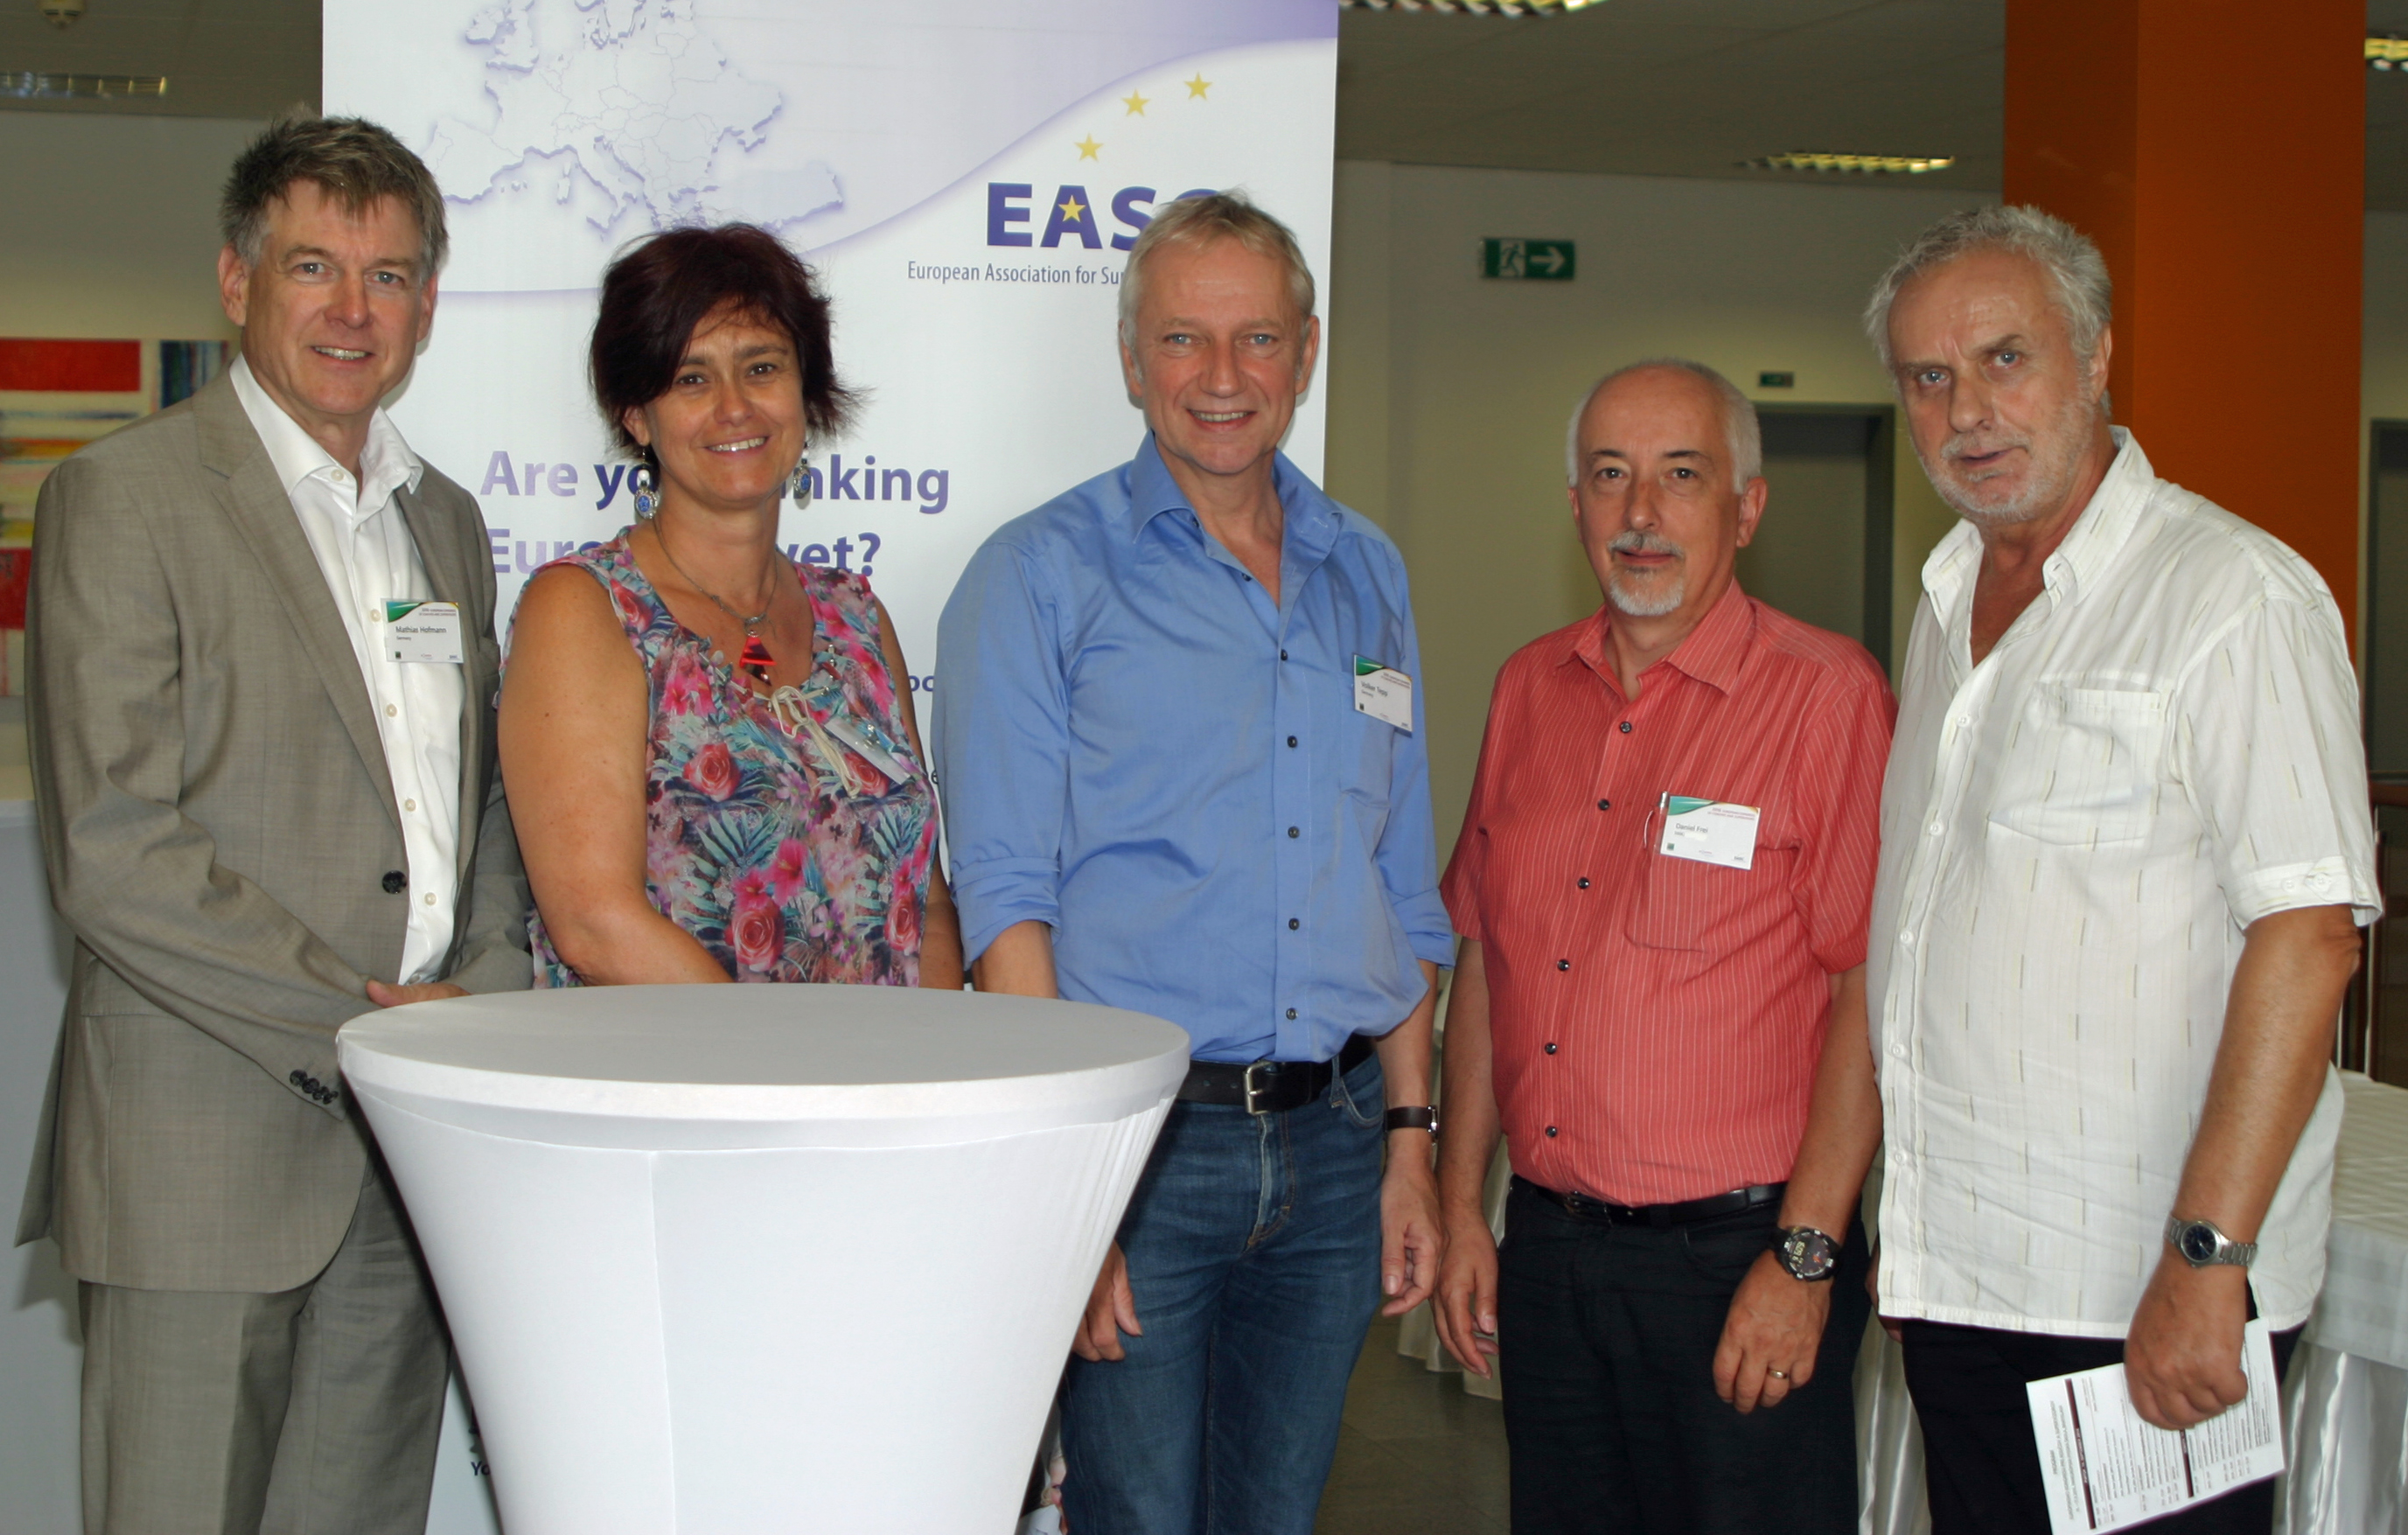 EASC-Vorstand: Mathias Hofmann, Susanne Rieger, Volker Tepp, Daniel Frei, Jan Koznar (v.l.n.r.)